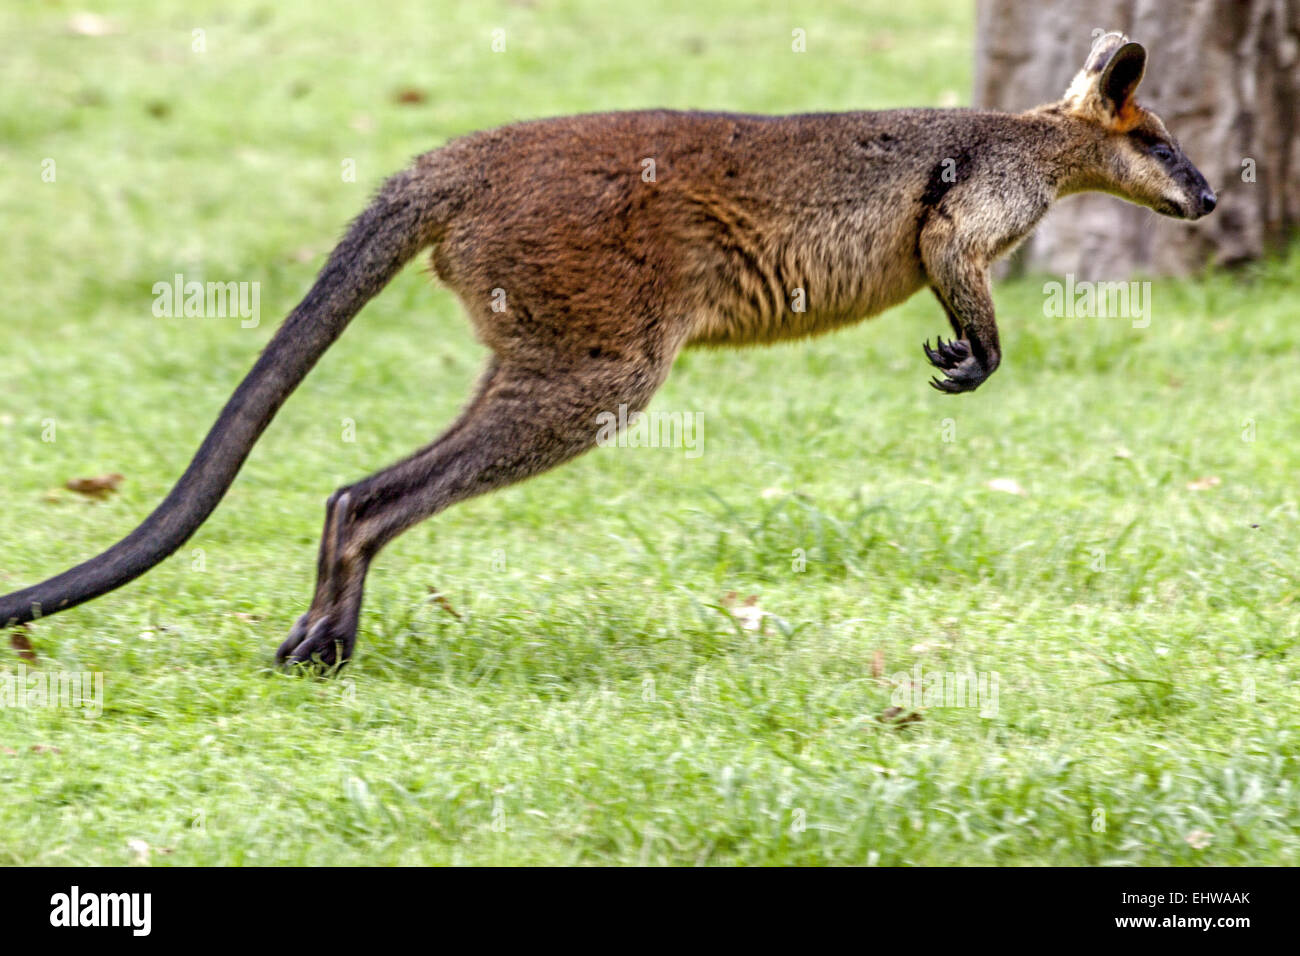 Bounding Red kangaroo Queensland Australia Stock Photo